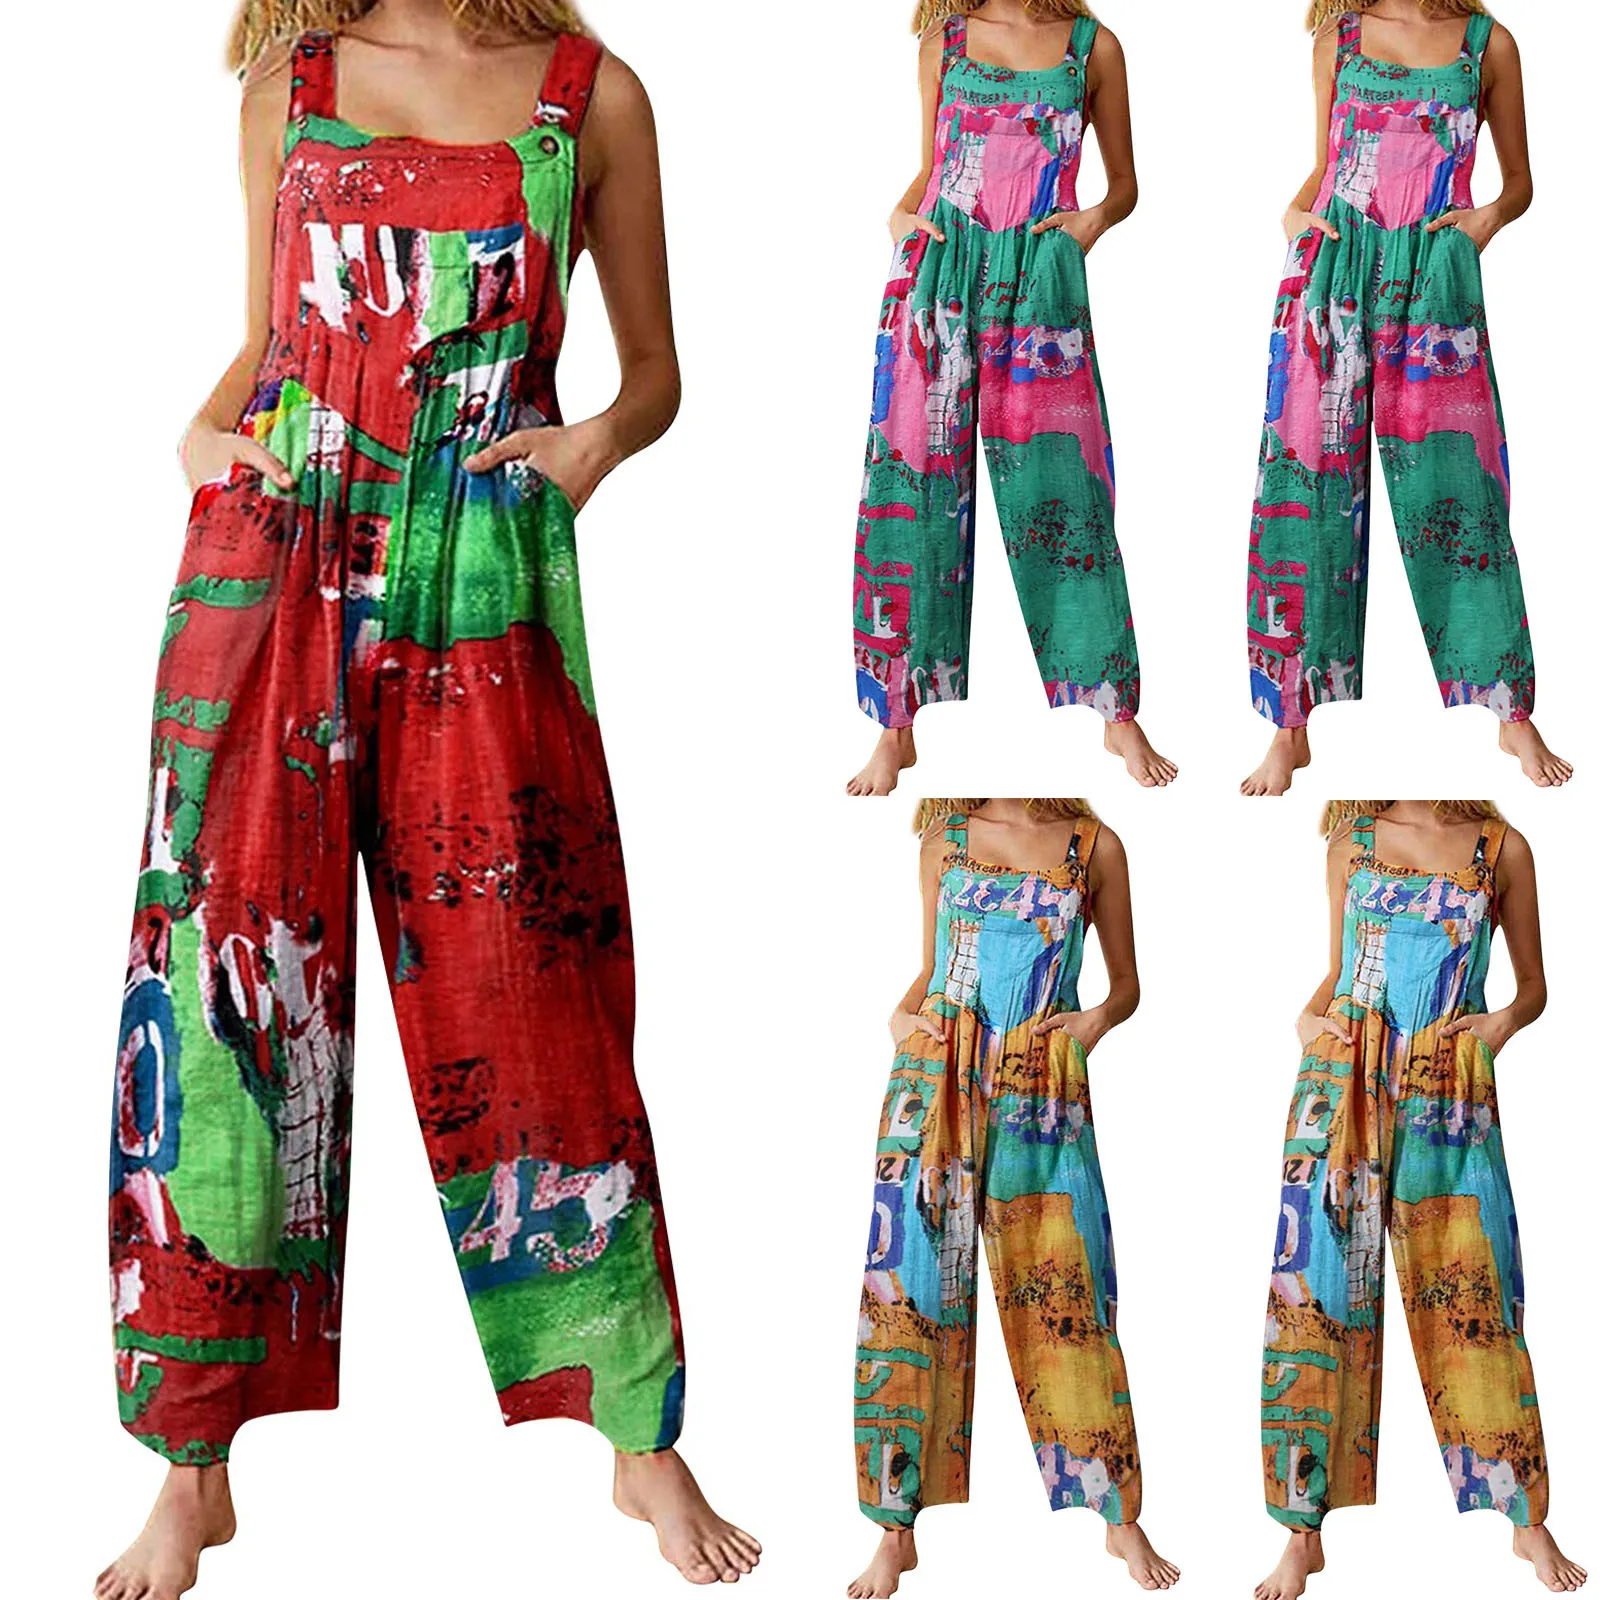 

Summer Bohemian Jumpsuit Women Elegance Fashion Elegant Ethnic Style Patchwork Vintage Printed Buttons Jumpsuits Outfits